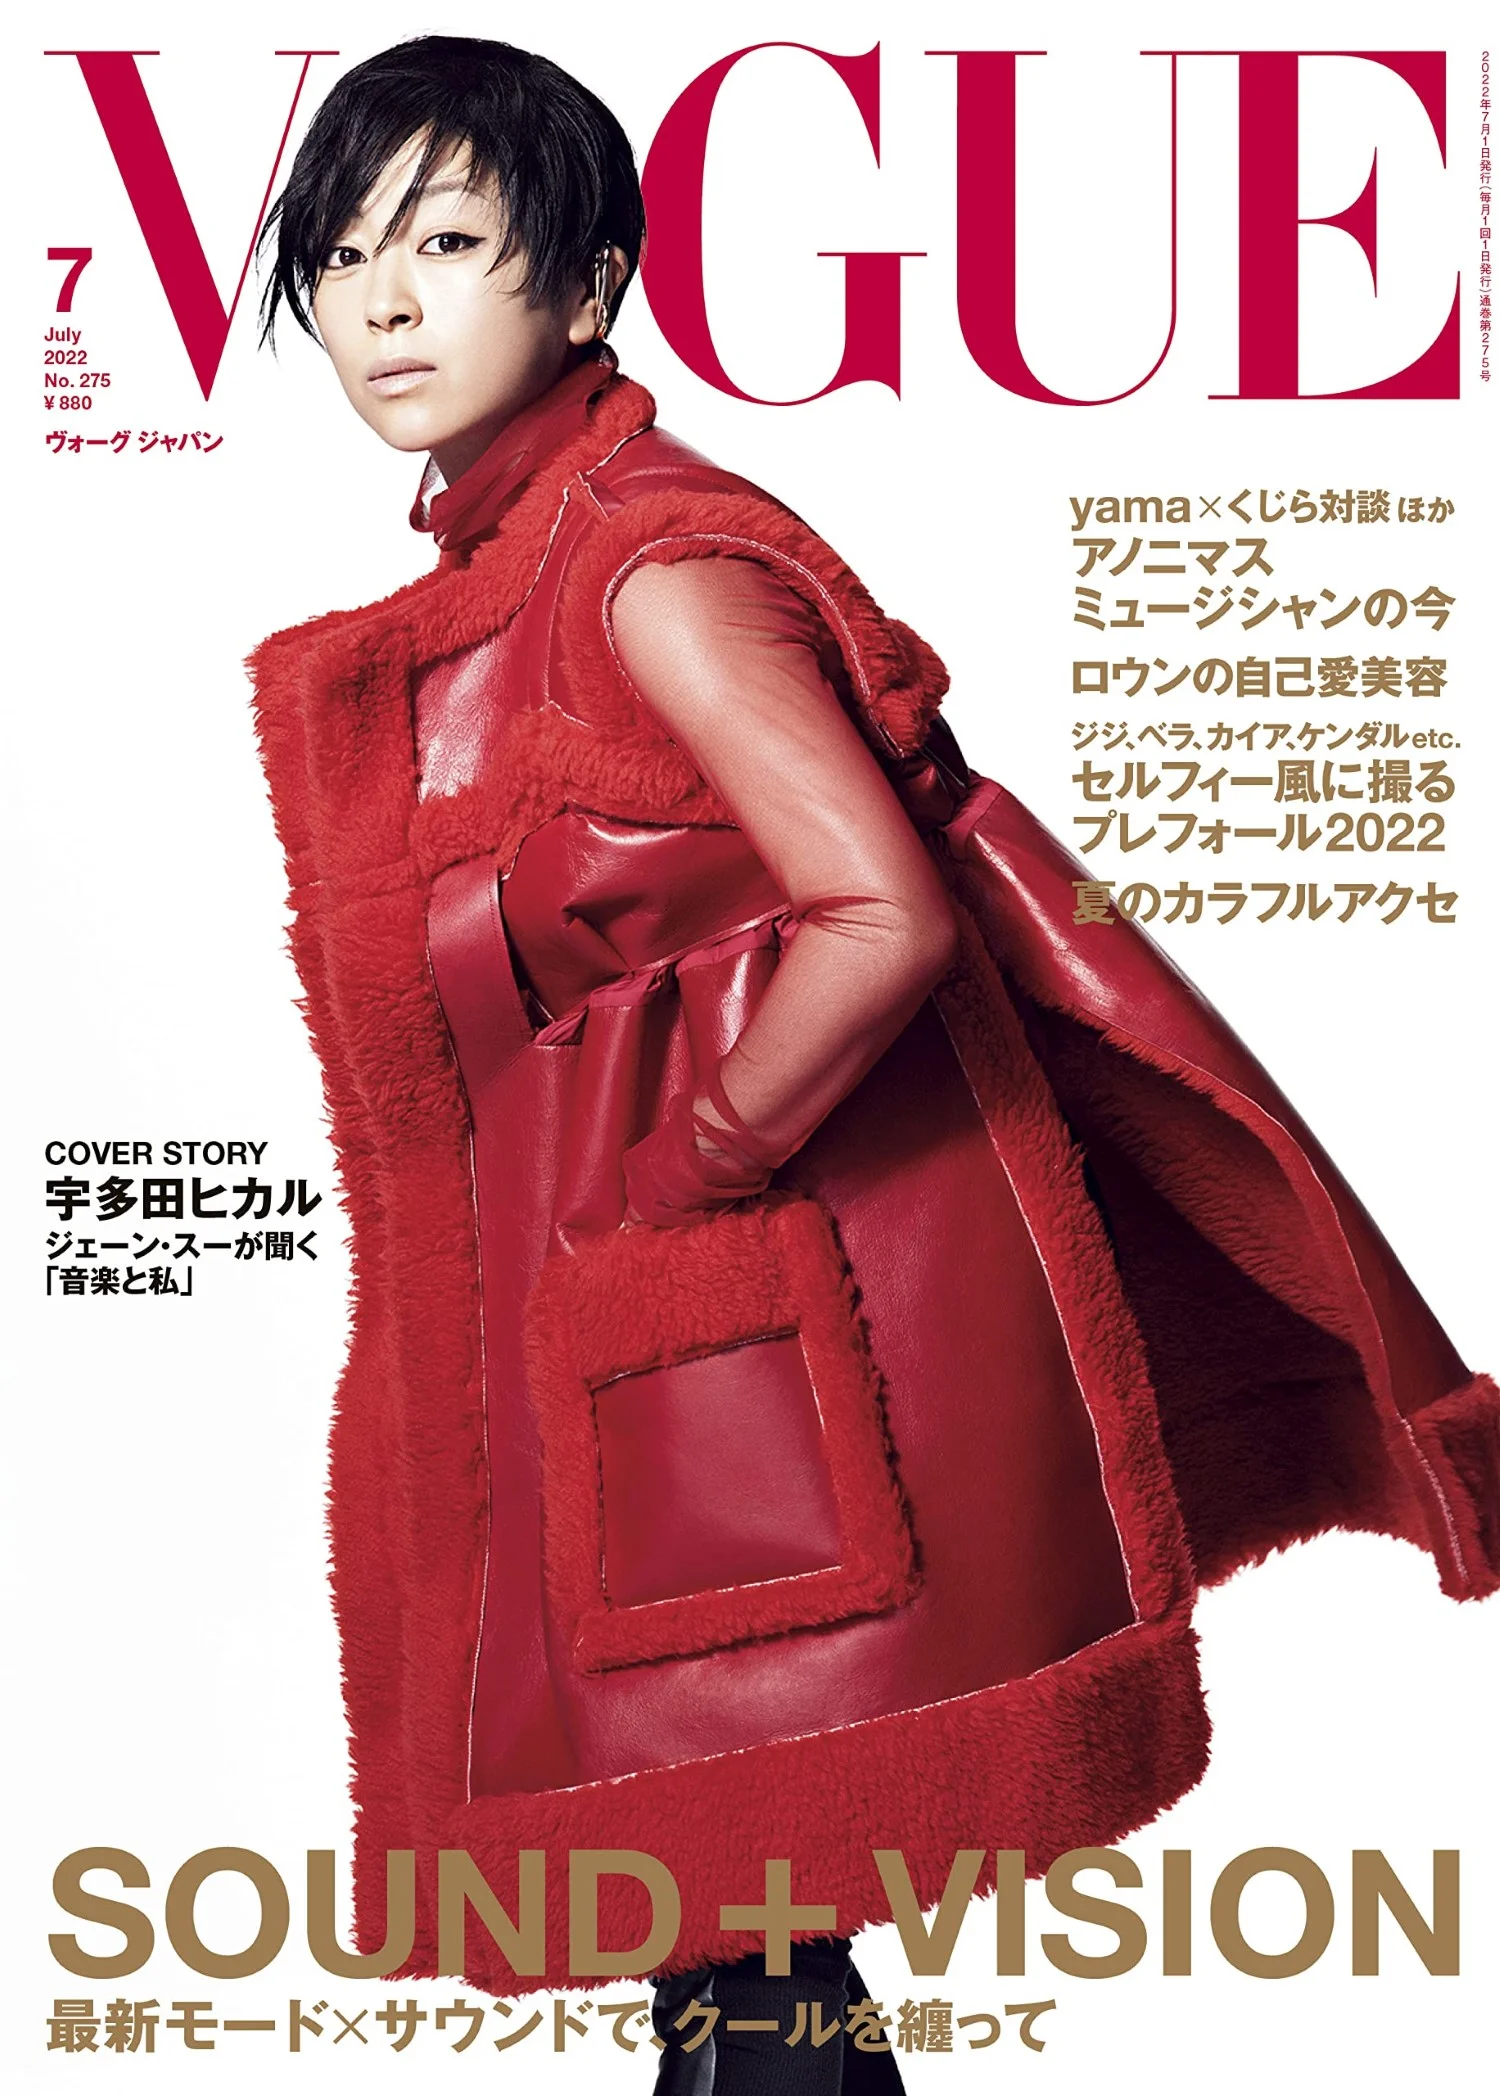 Hikaru Utada covers Vogue Japan July 2022 by Shoji Uchida